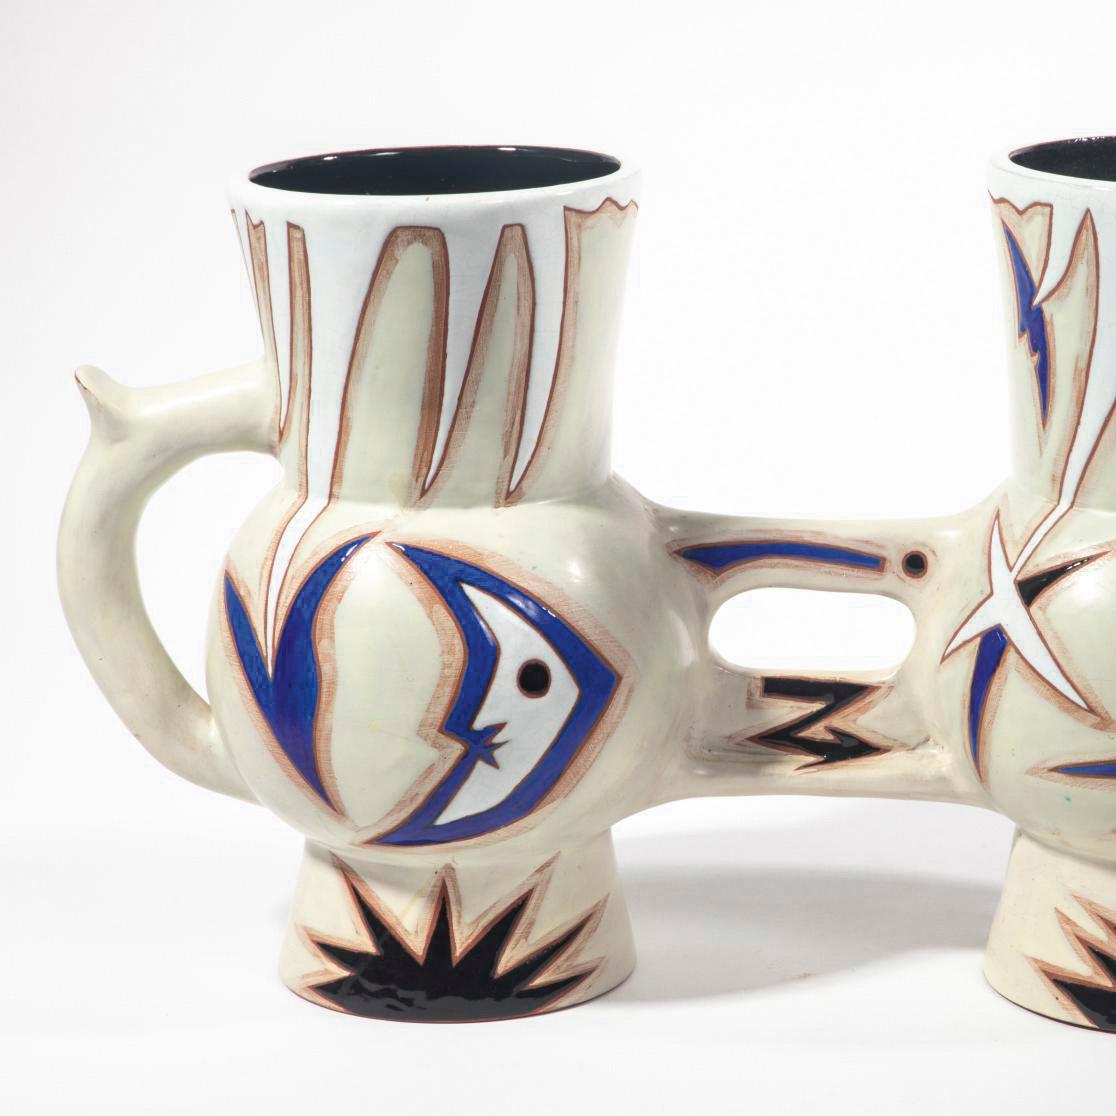 Ceramics of Jean Lurçat - Market Trends